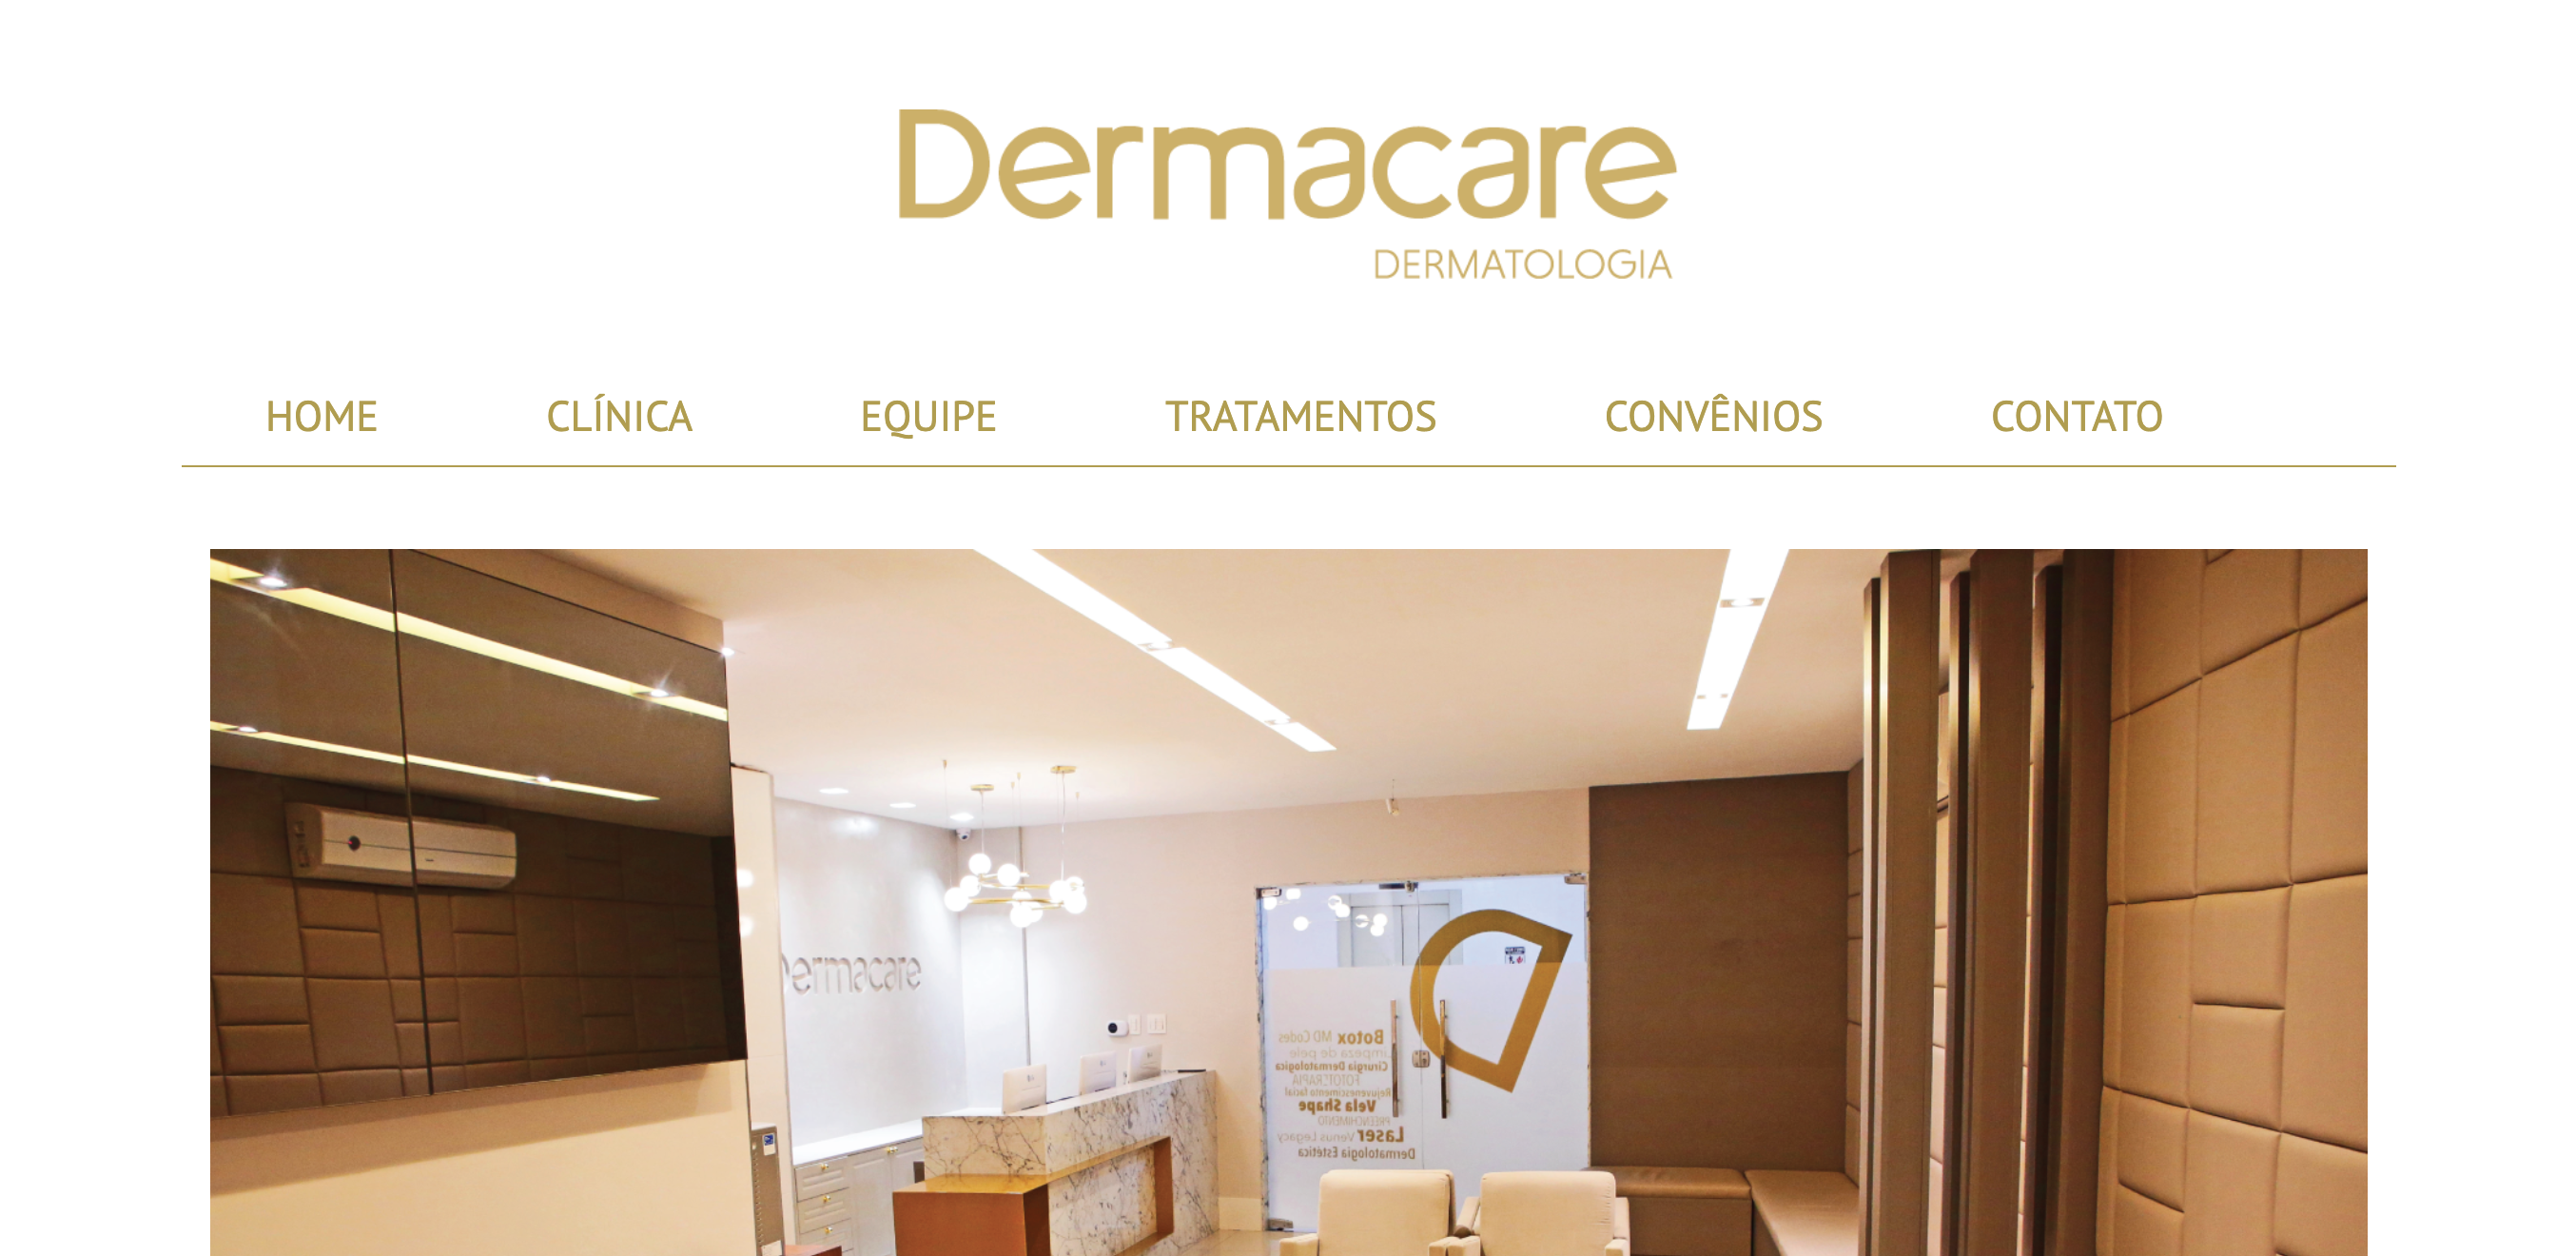 Portifólio - Clinica Dermacare